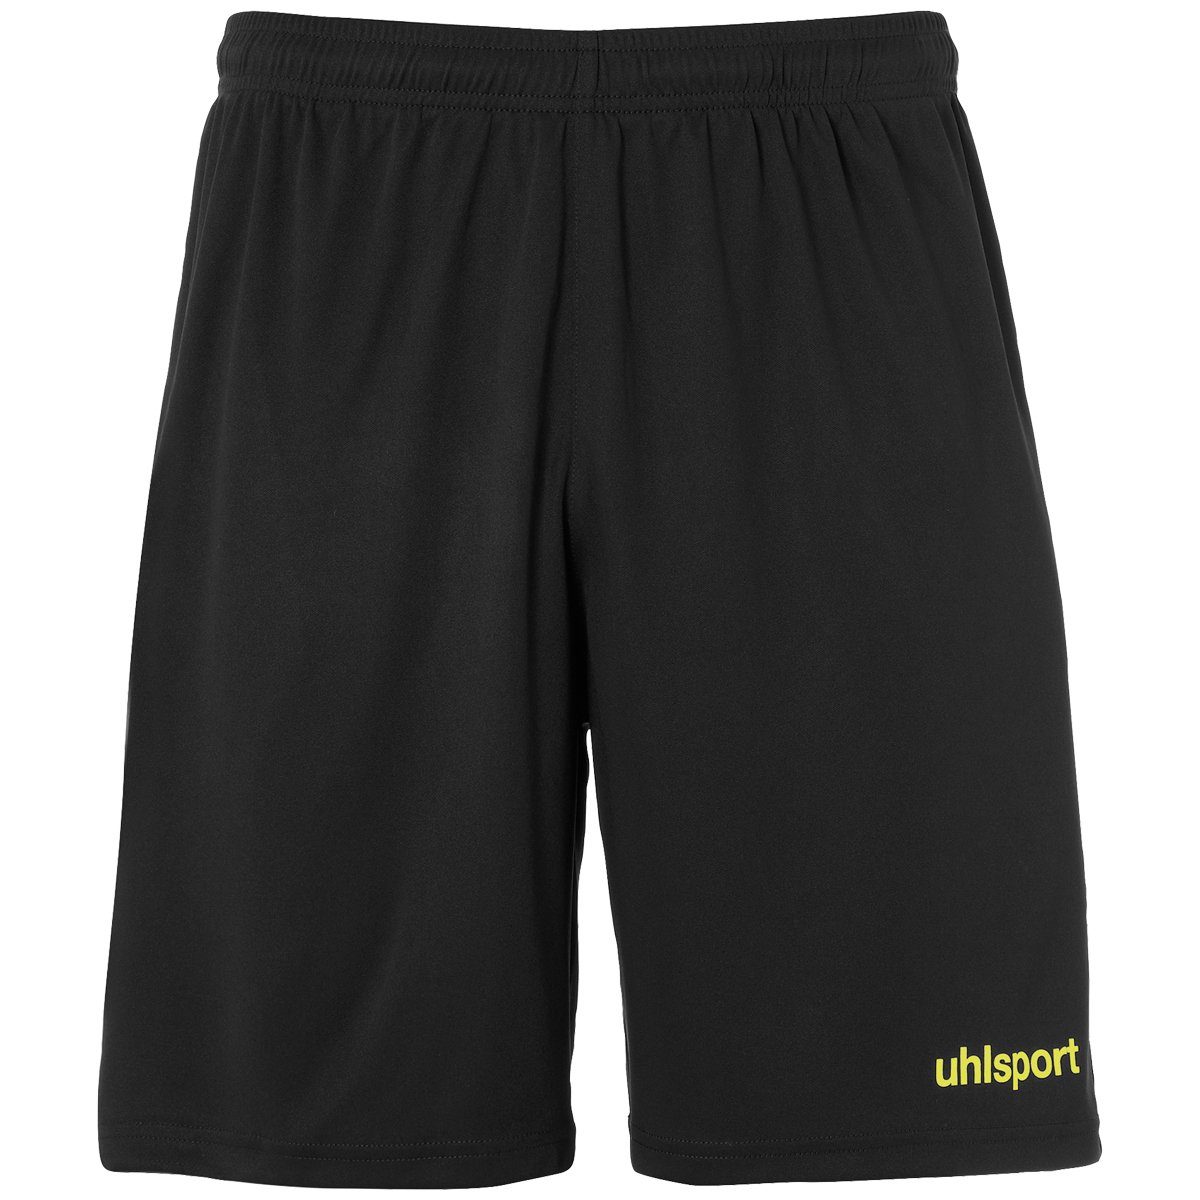 uhlsport Shorts uhlsport Shorts schwarz/fluo gelb